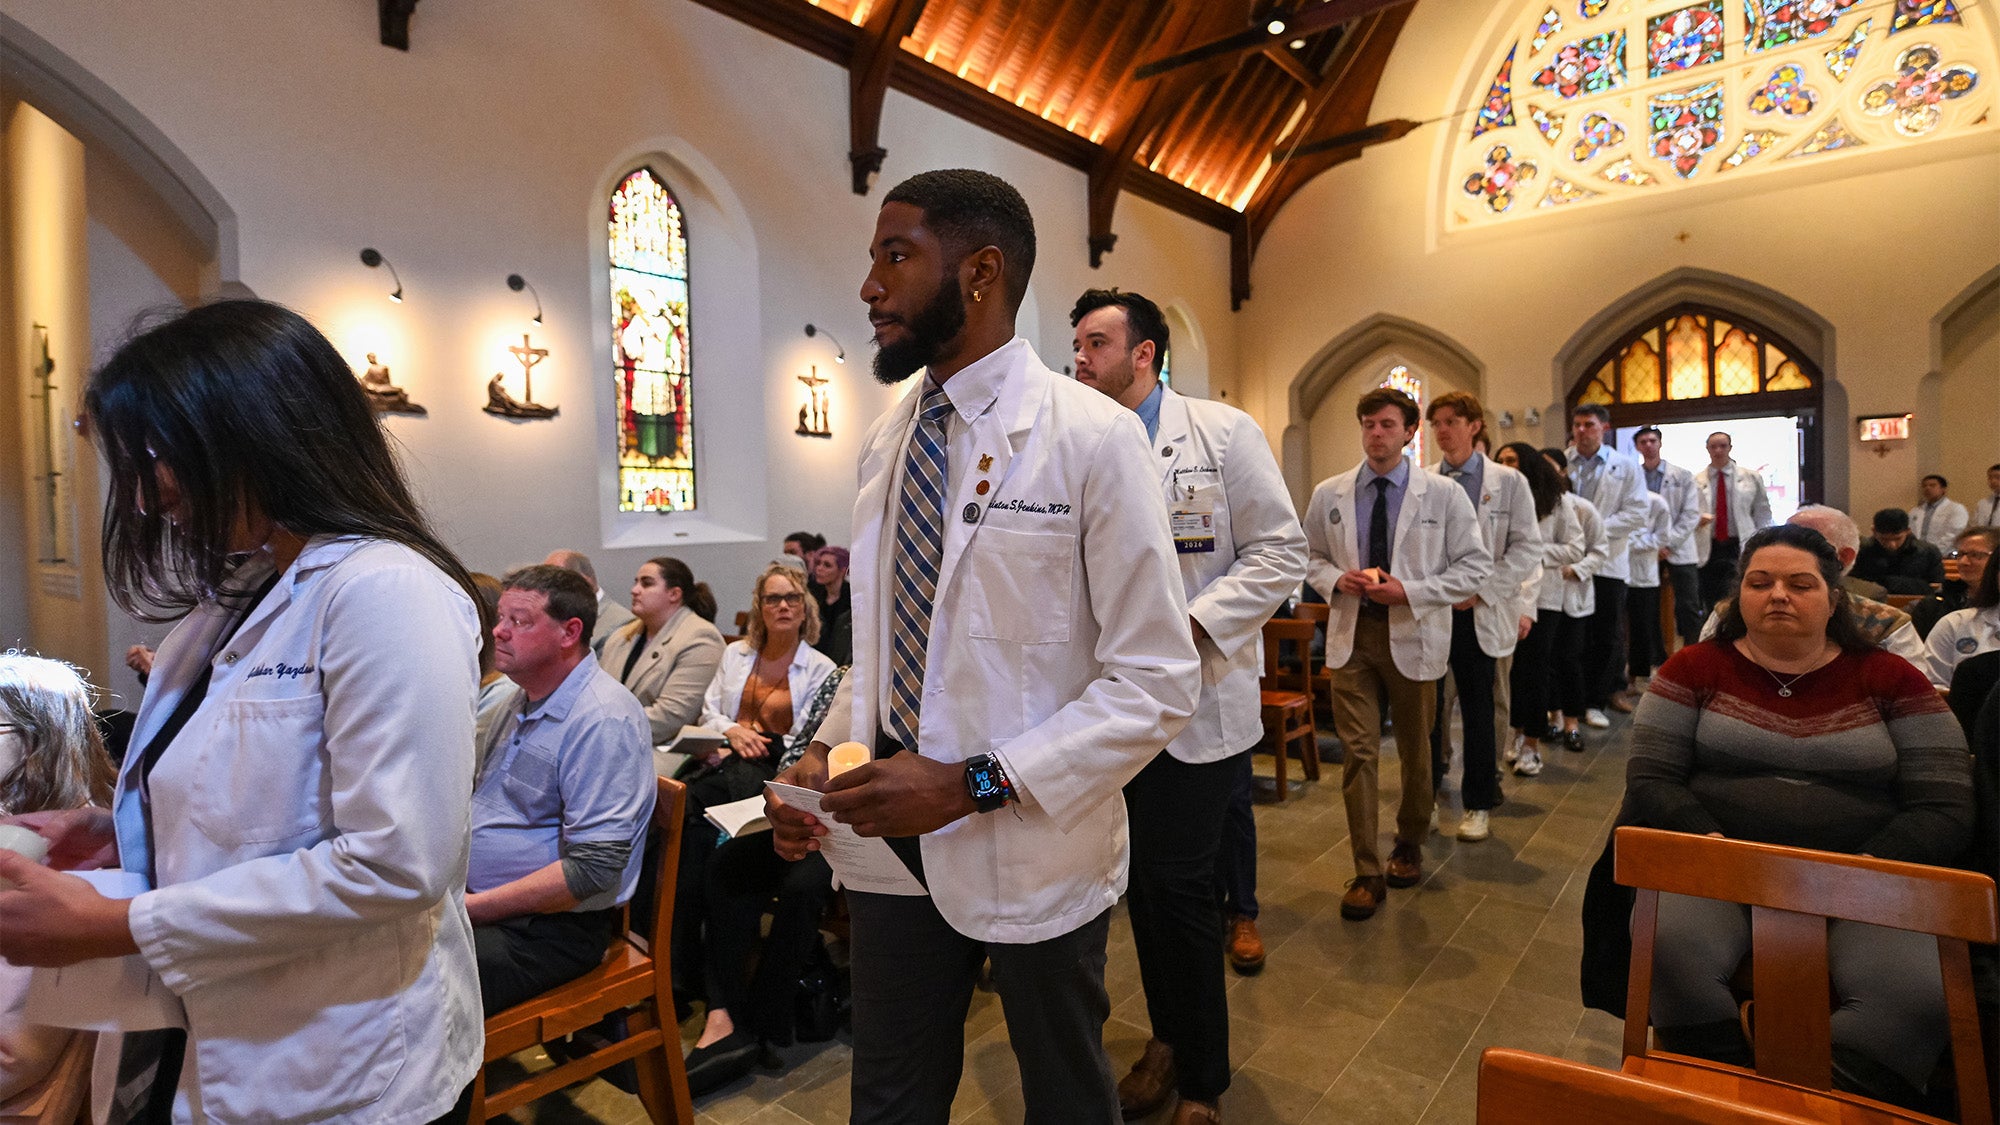 Medical students process into Dahlgren, which is full of congregants